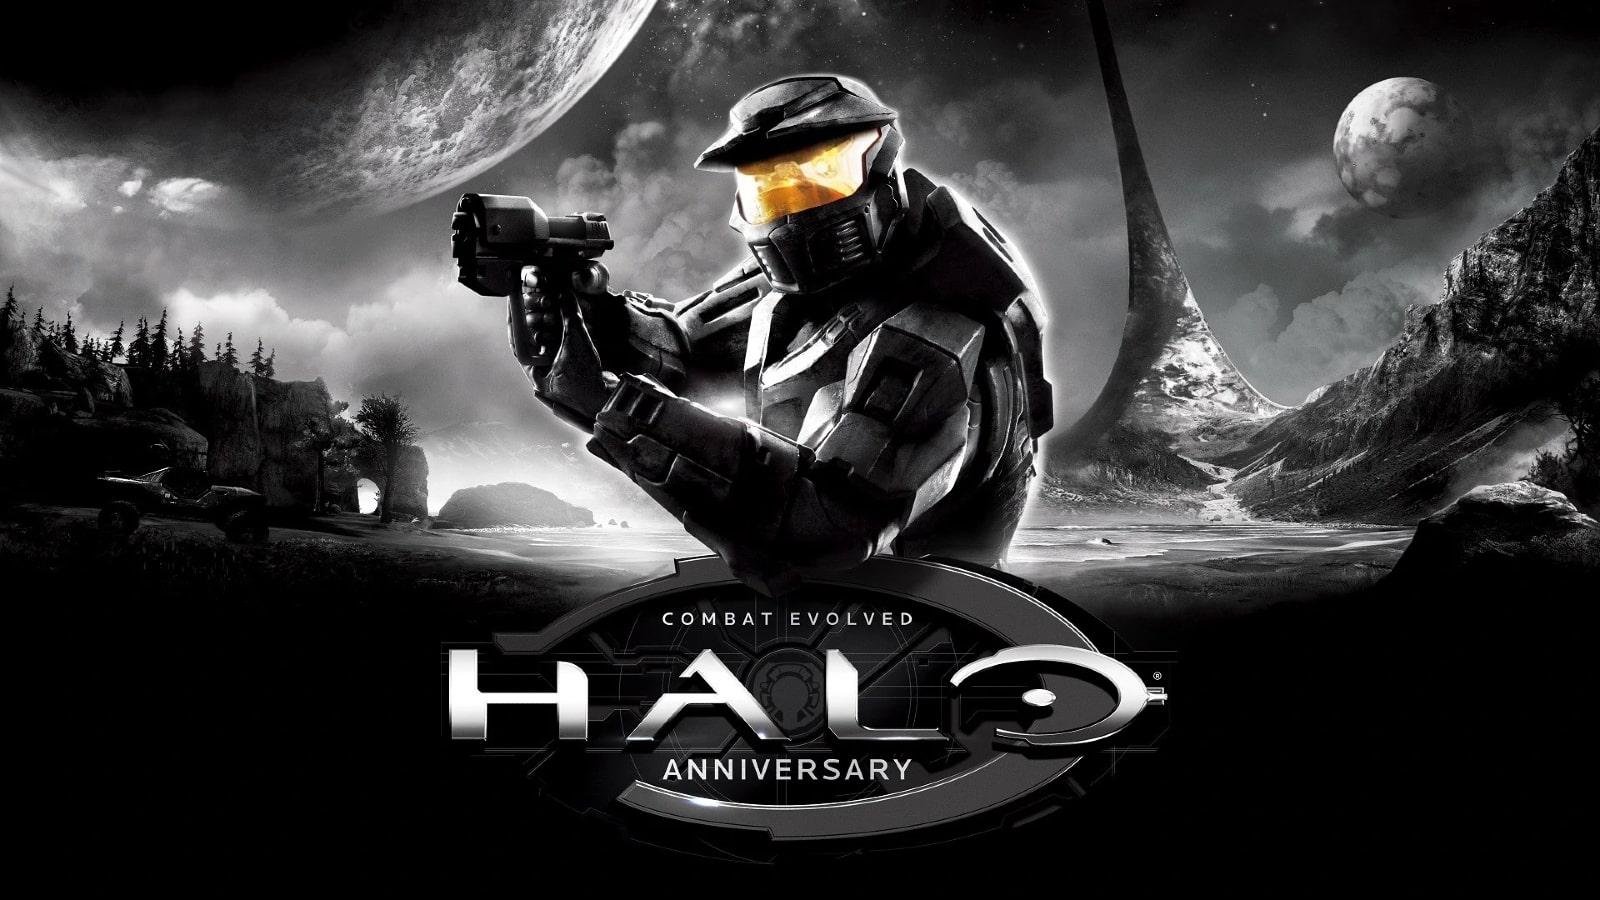 Halo anniversary banner